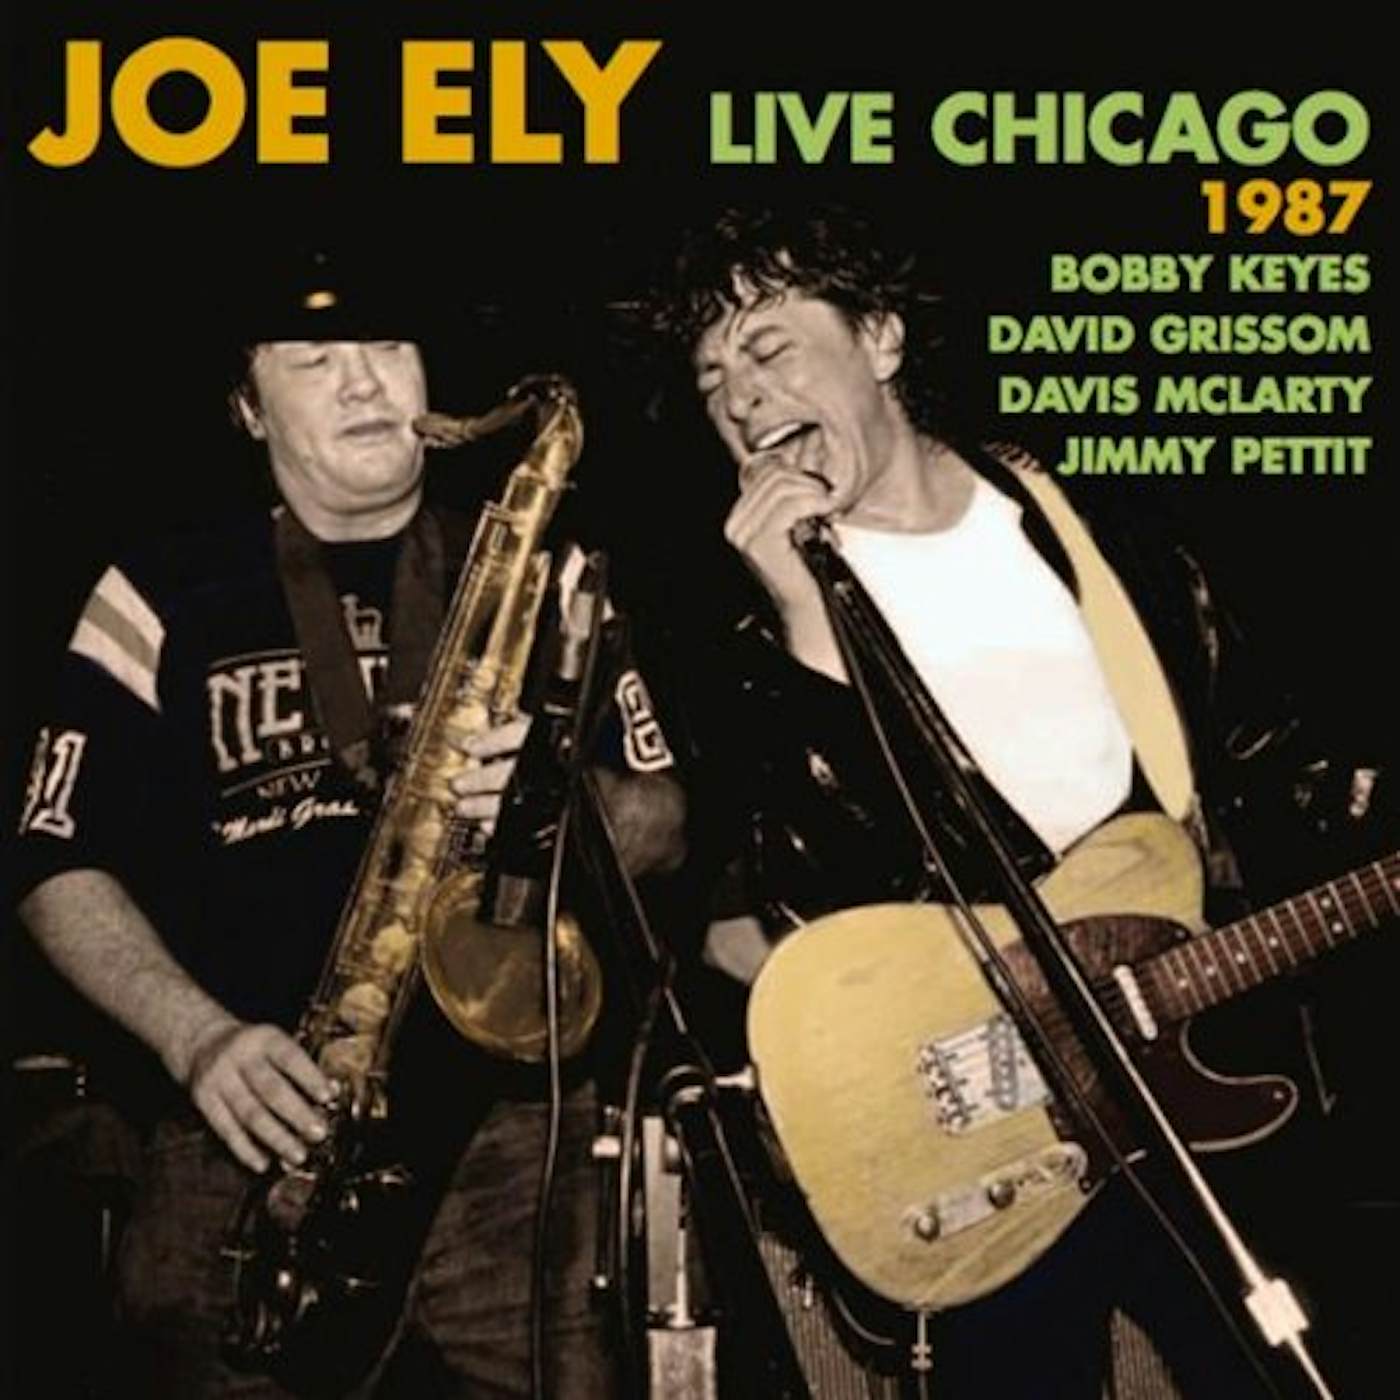 Joe Ely LIVE CHICAGO 1987 CD